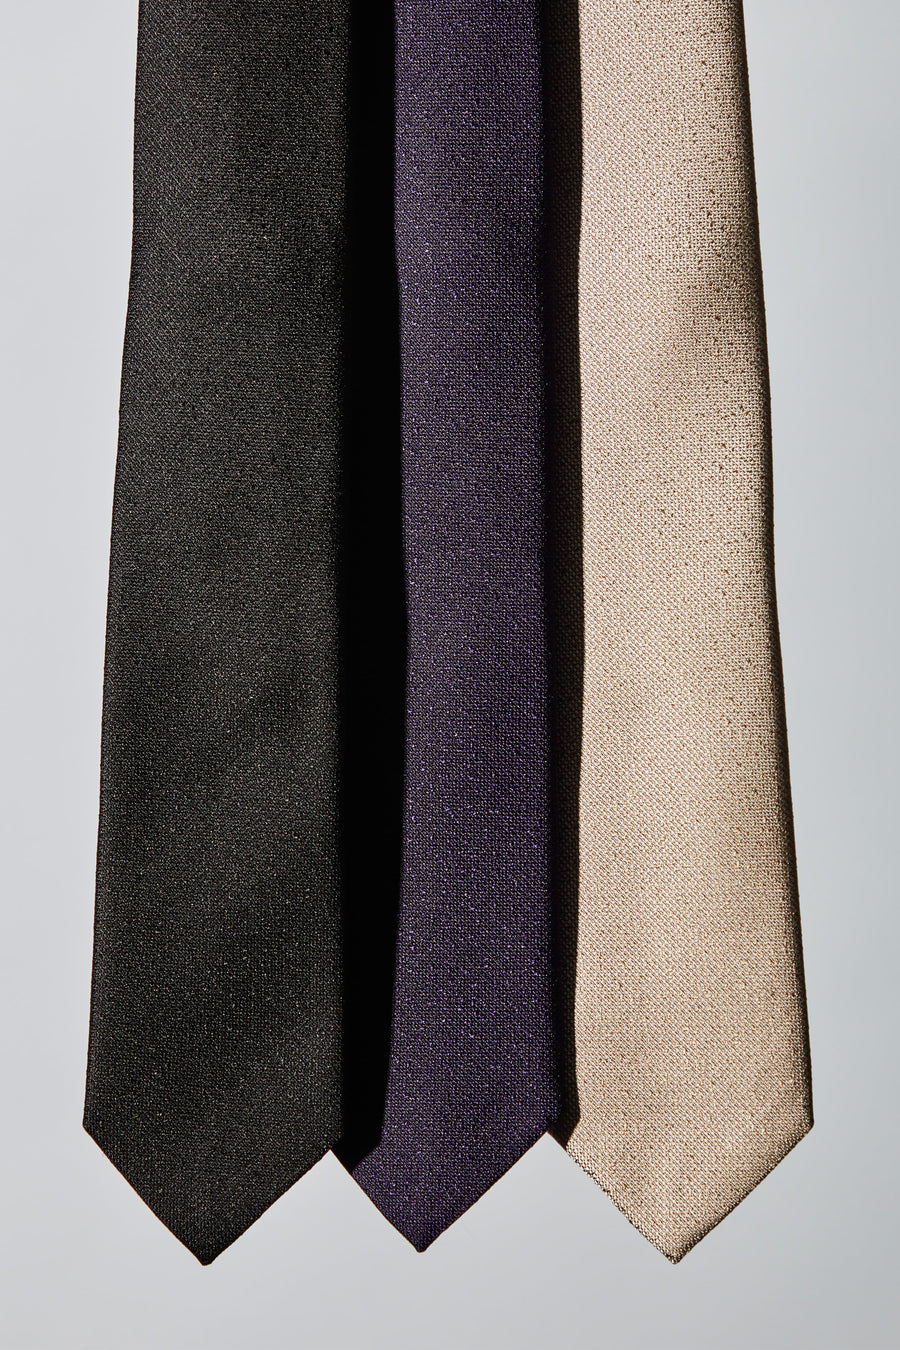 LITTLEBIG  Silk Tie（BLACK & PURPLE）